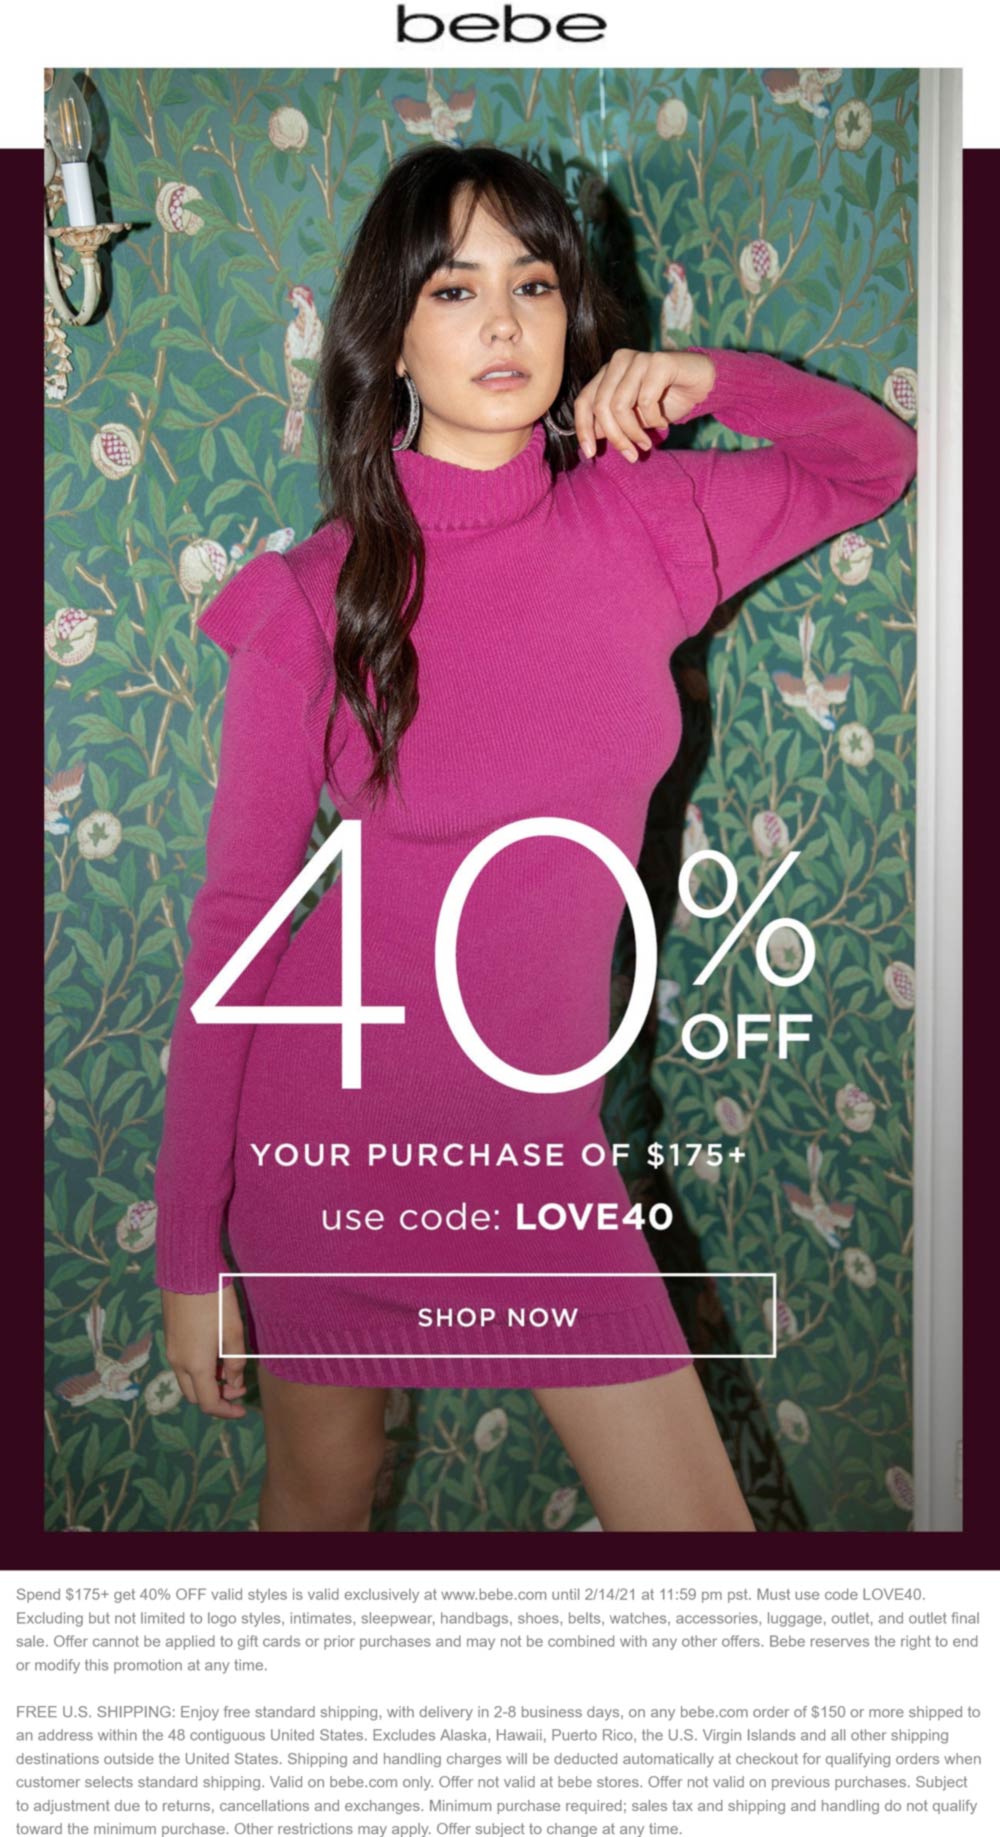 40% off $175 at bebe via promo code LOVE40 #bebe | The Coupons App®